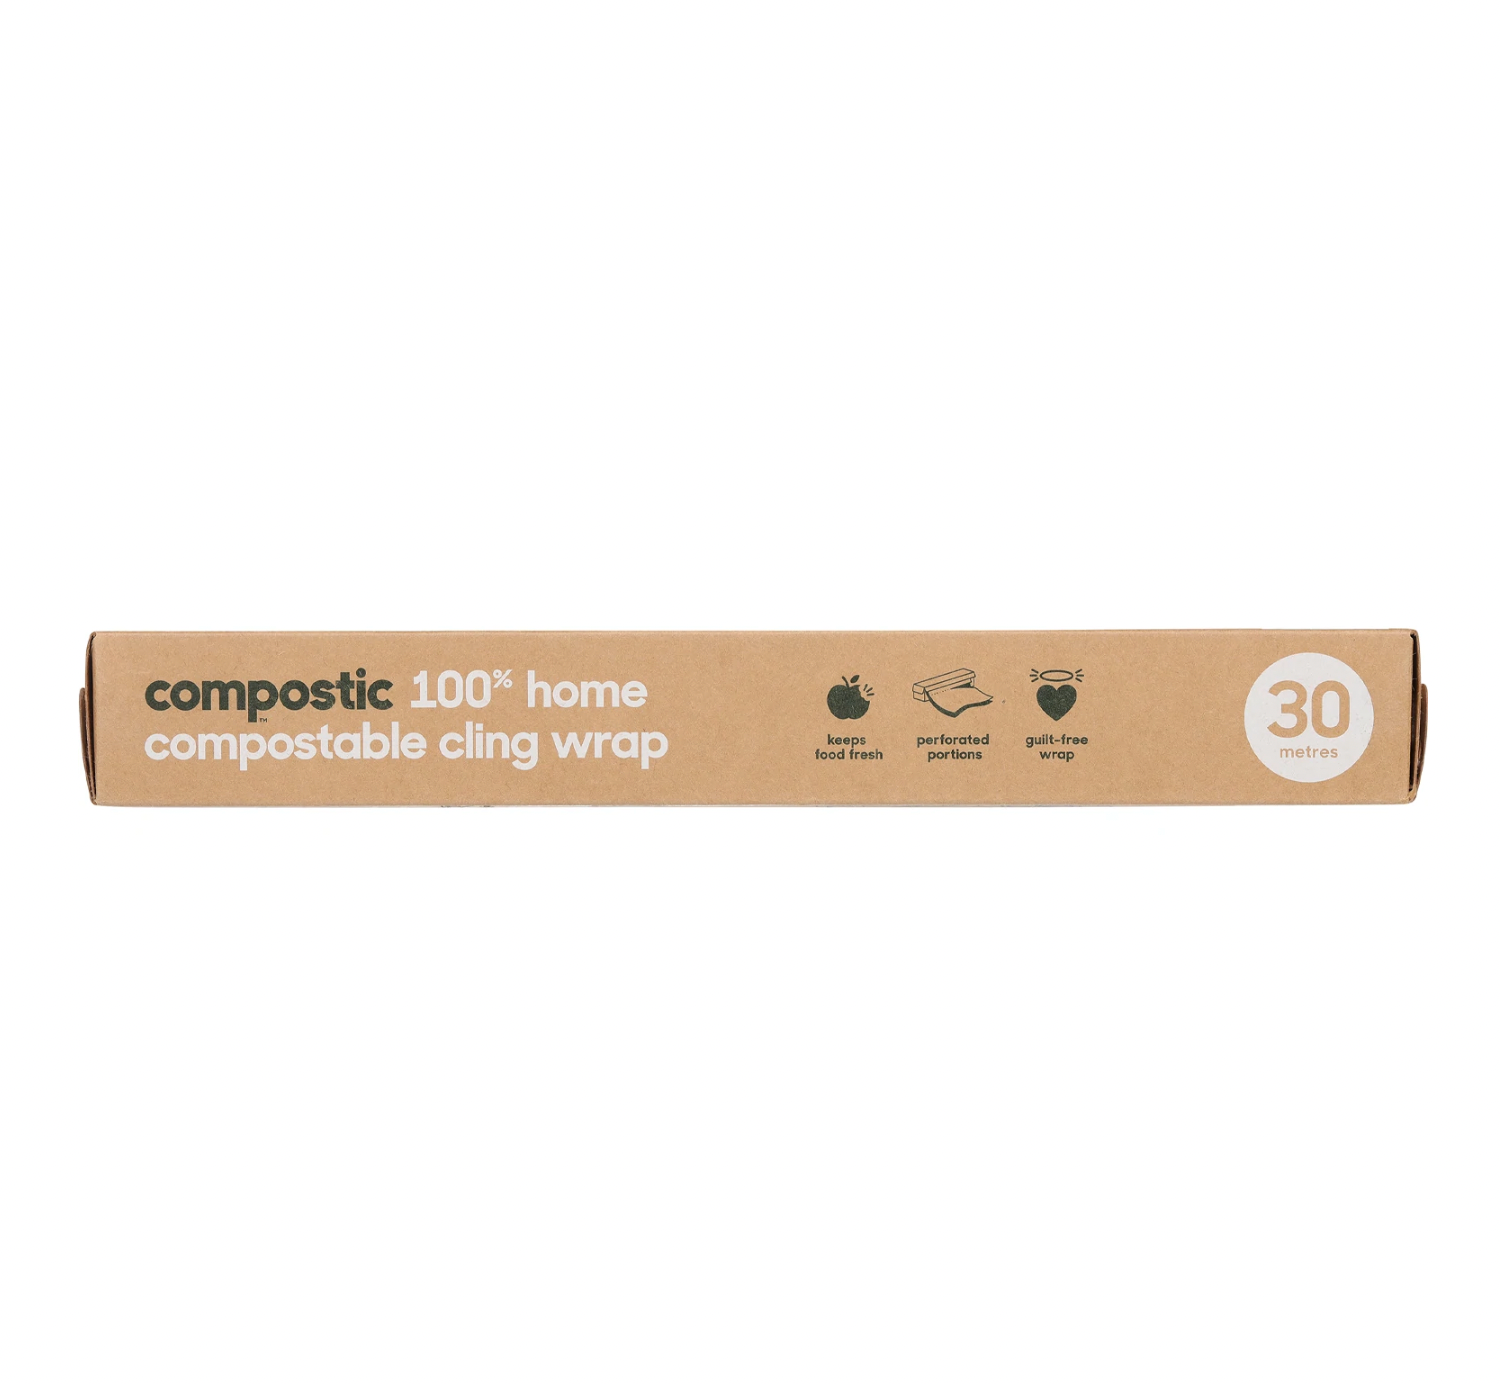 Compostic Film Adherente Compostable 30M